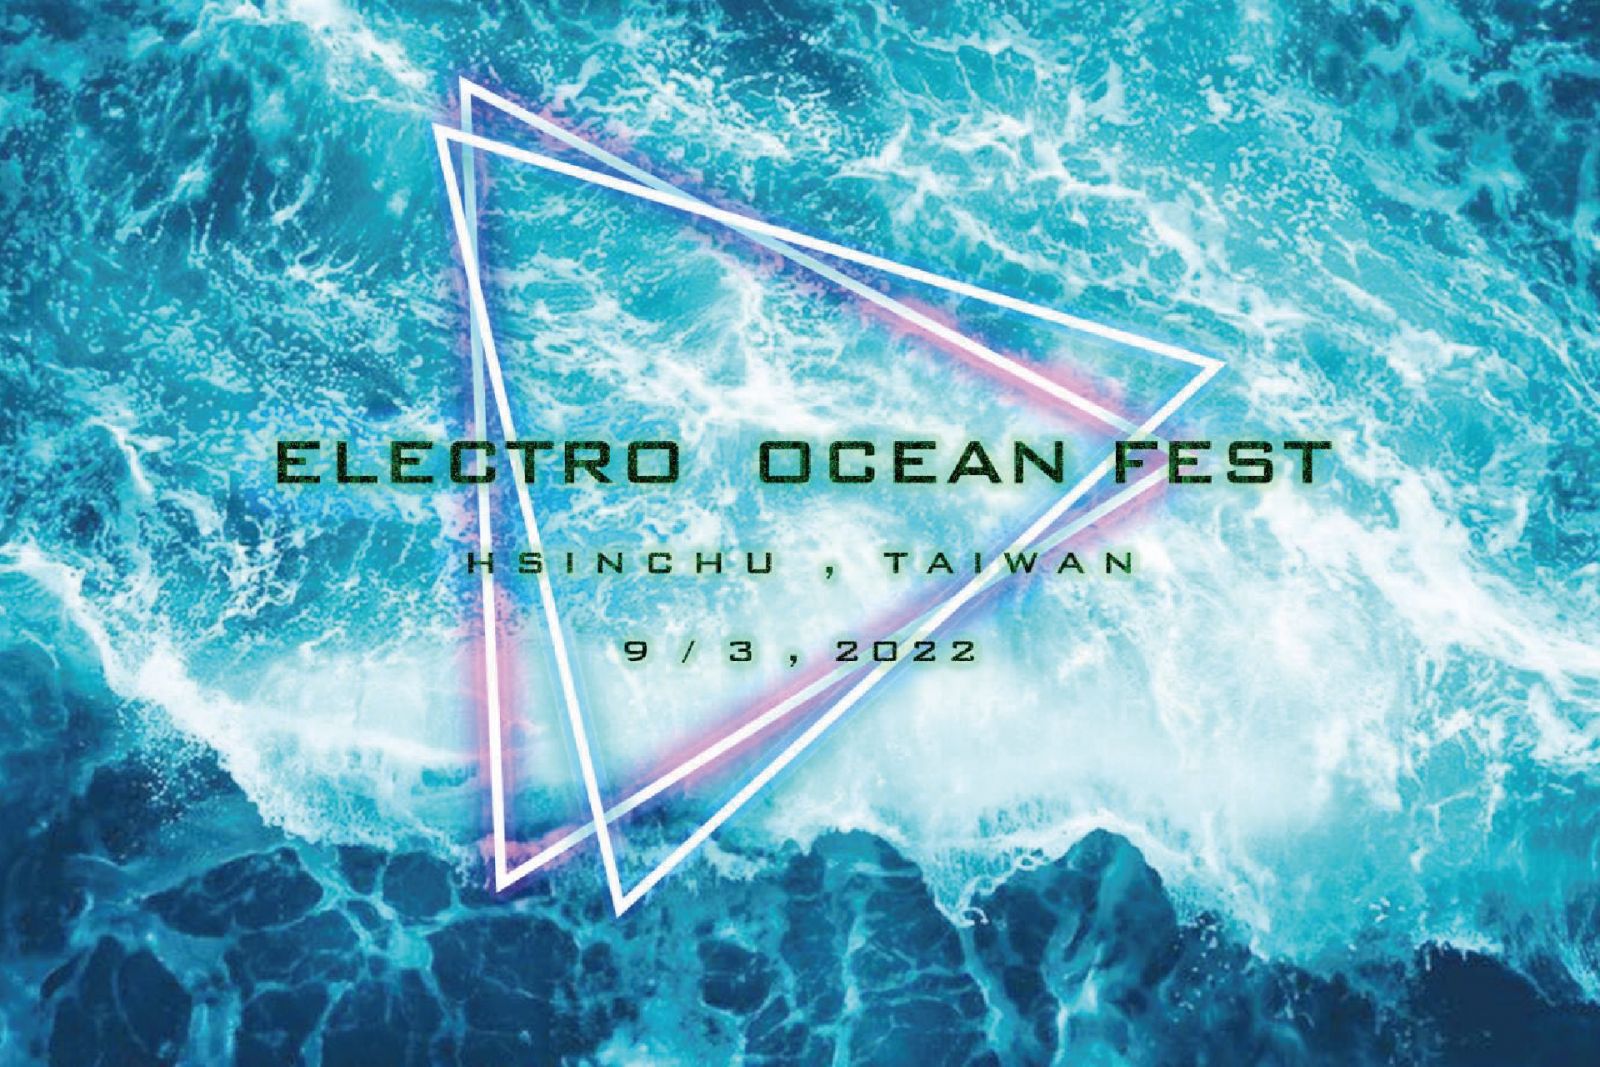 【分享】竹塹海洋音樂祭 Electro Ocean Fest 